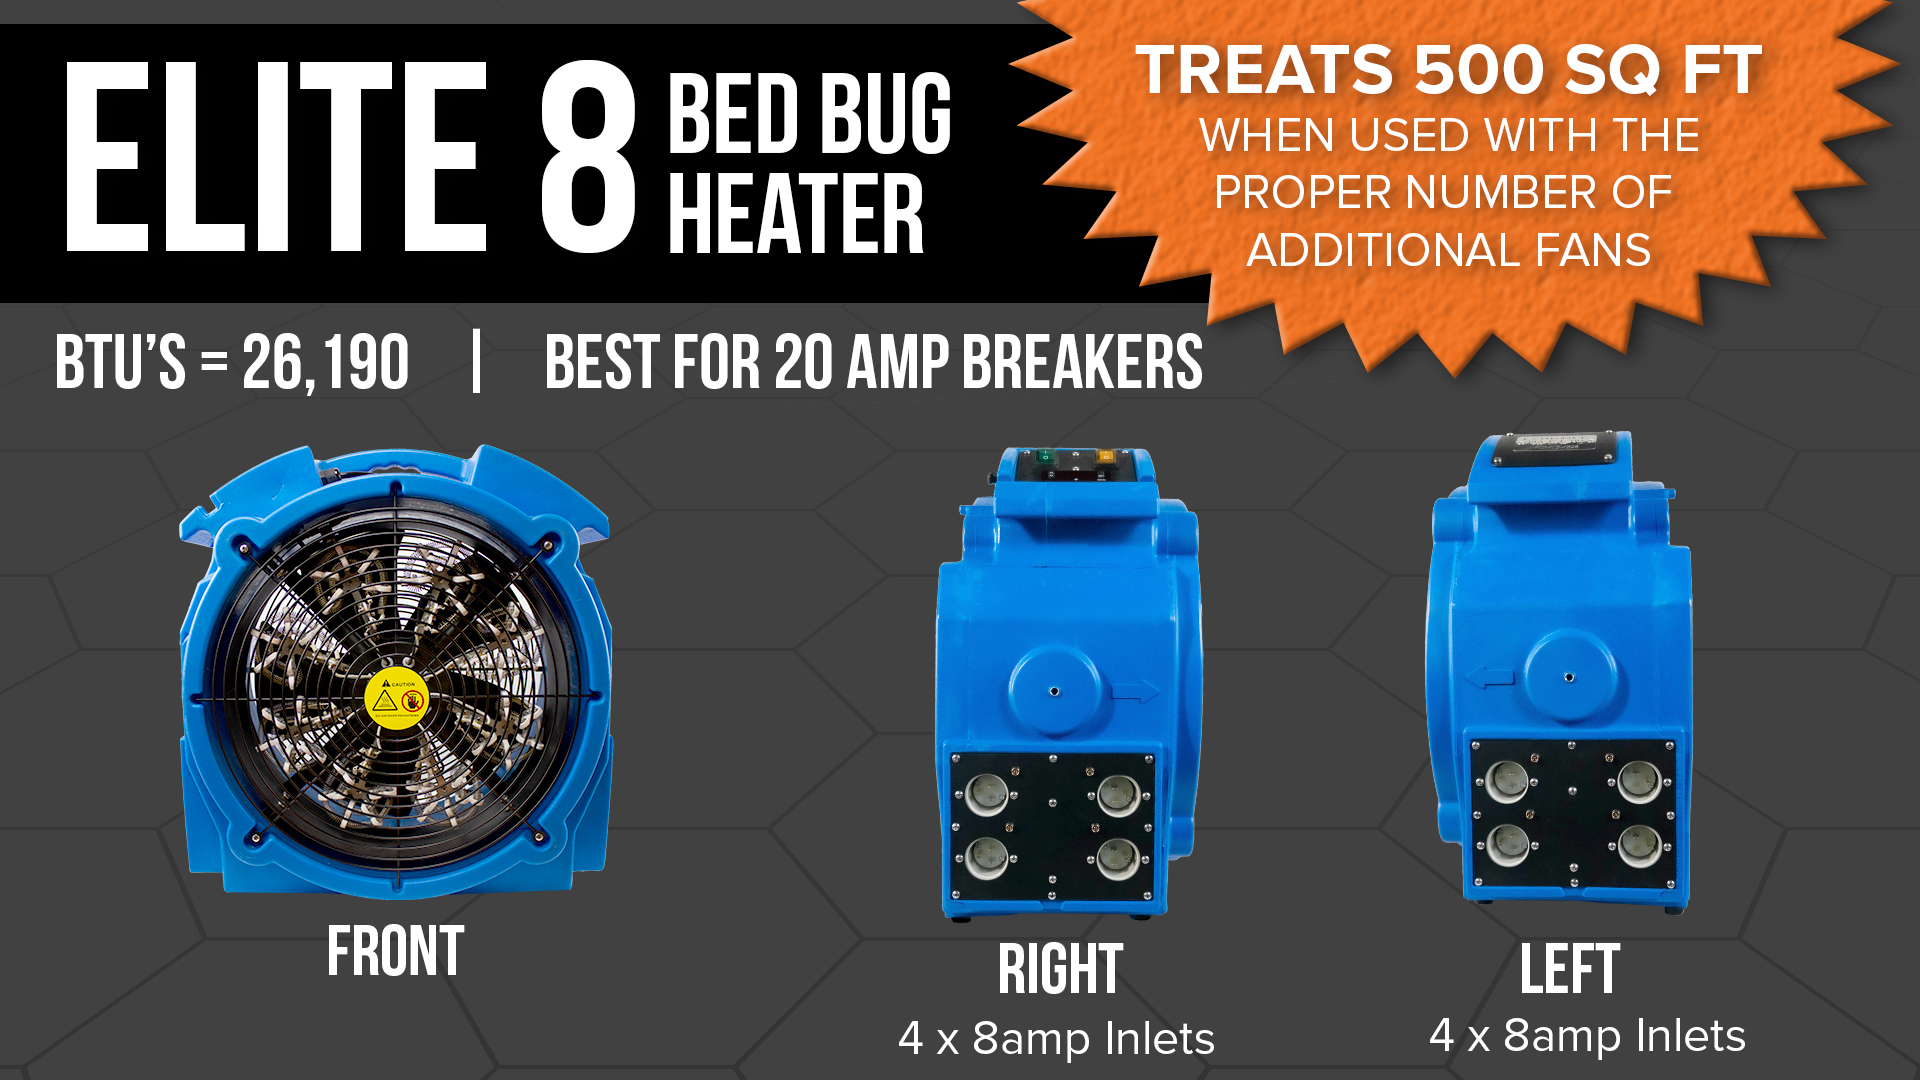 Elite 8 Bedbug Heater Specs